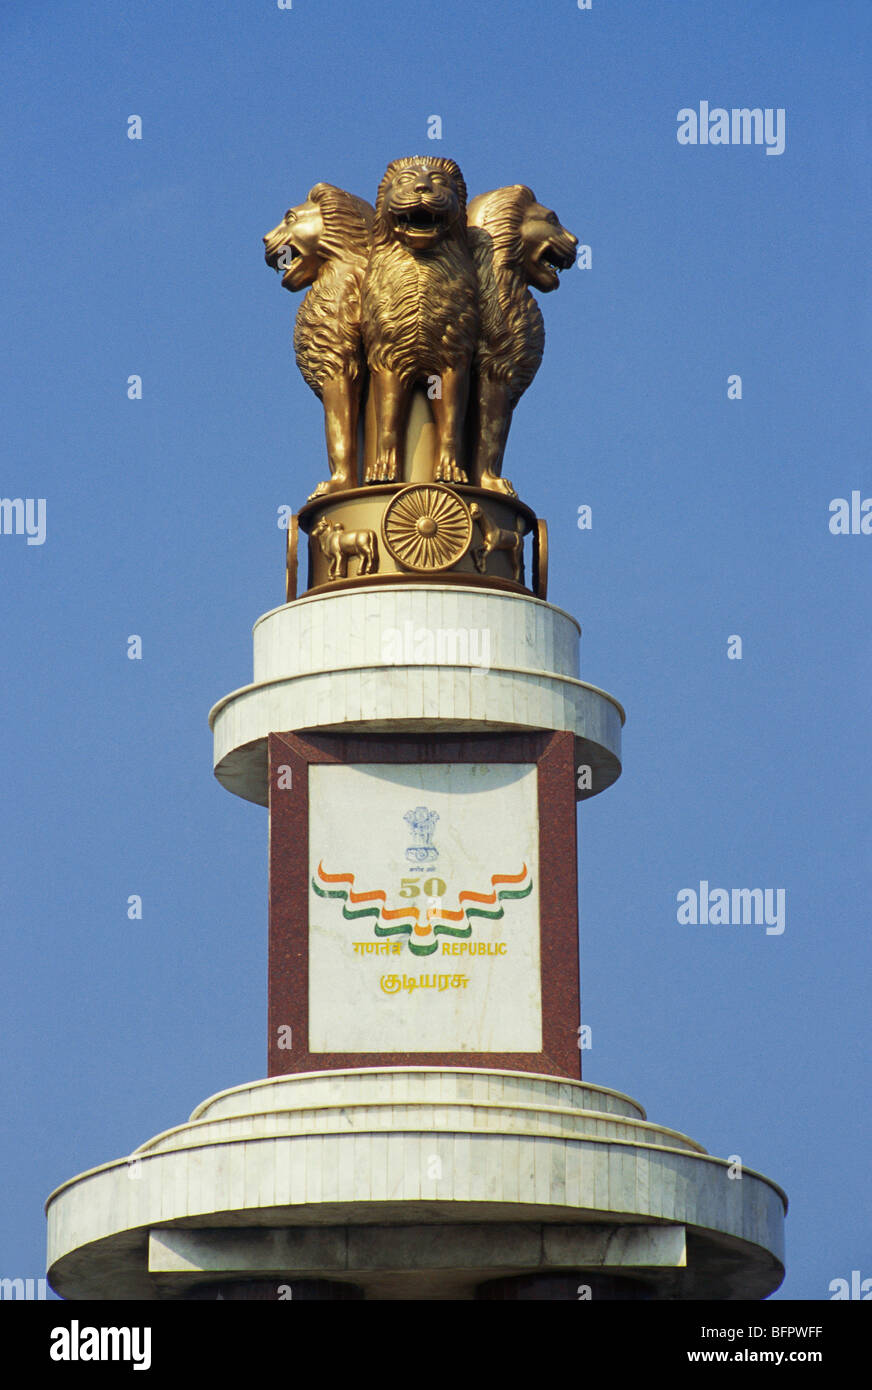 66454 NMK : Ashok Stambha quatre têtes de lion en or ; peinture ; Marina ; Chennai Tamil Nadu Inde ; Banque D'Images